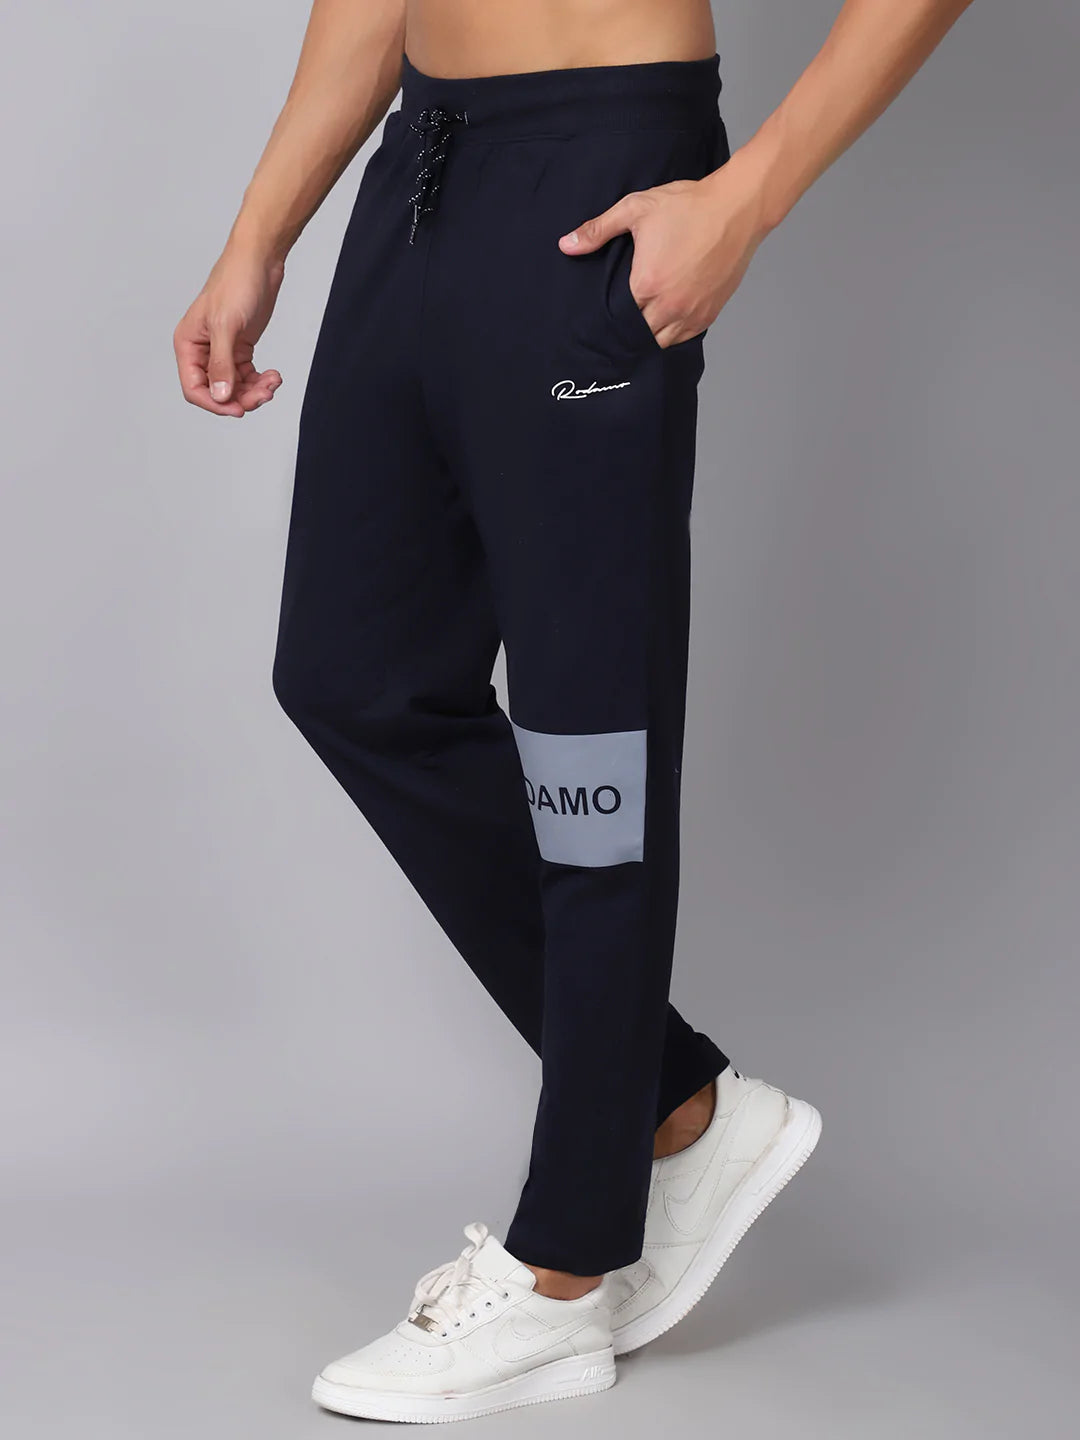 Screenshotbrand Mens Hip Hop Premium Slim Fit Track Pants - Athletic Jogger  Bott | eBay